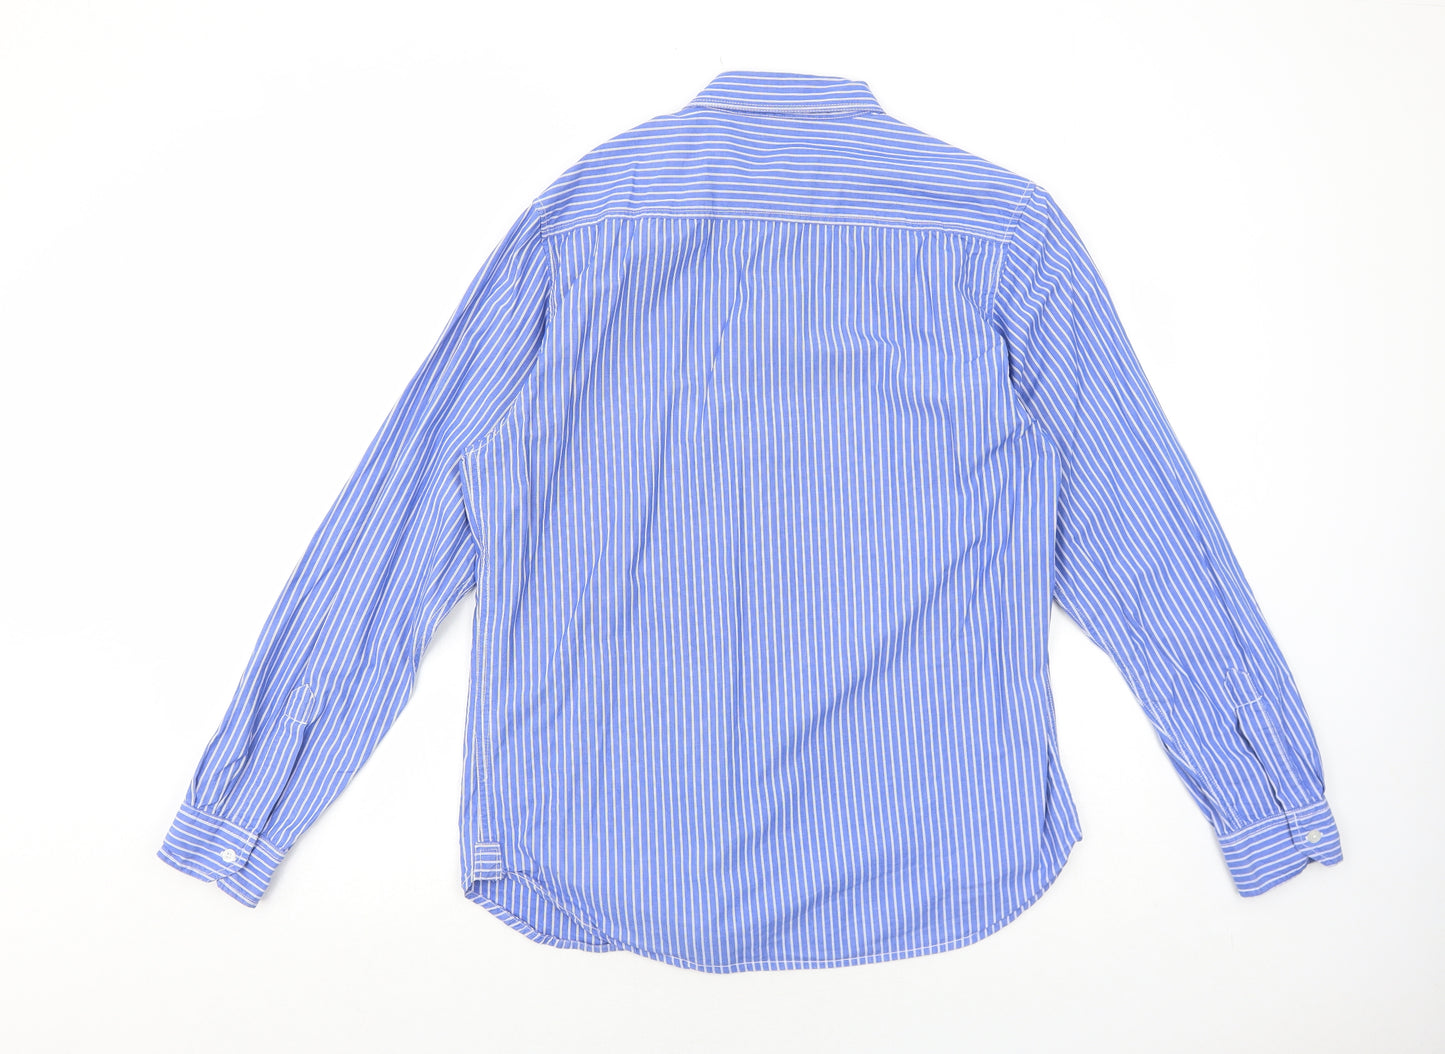 Cedar Wood State Mens Blue Striped Cotton Dress Shirt Size L Collared Button